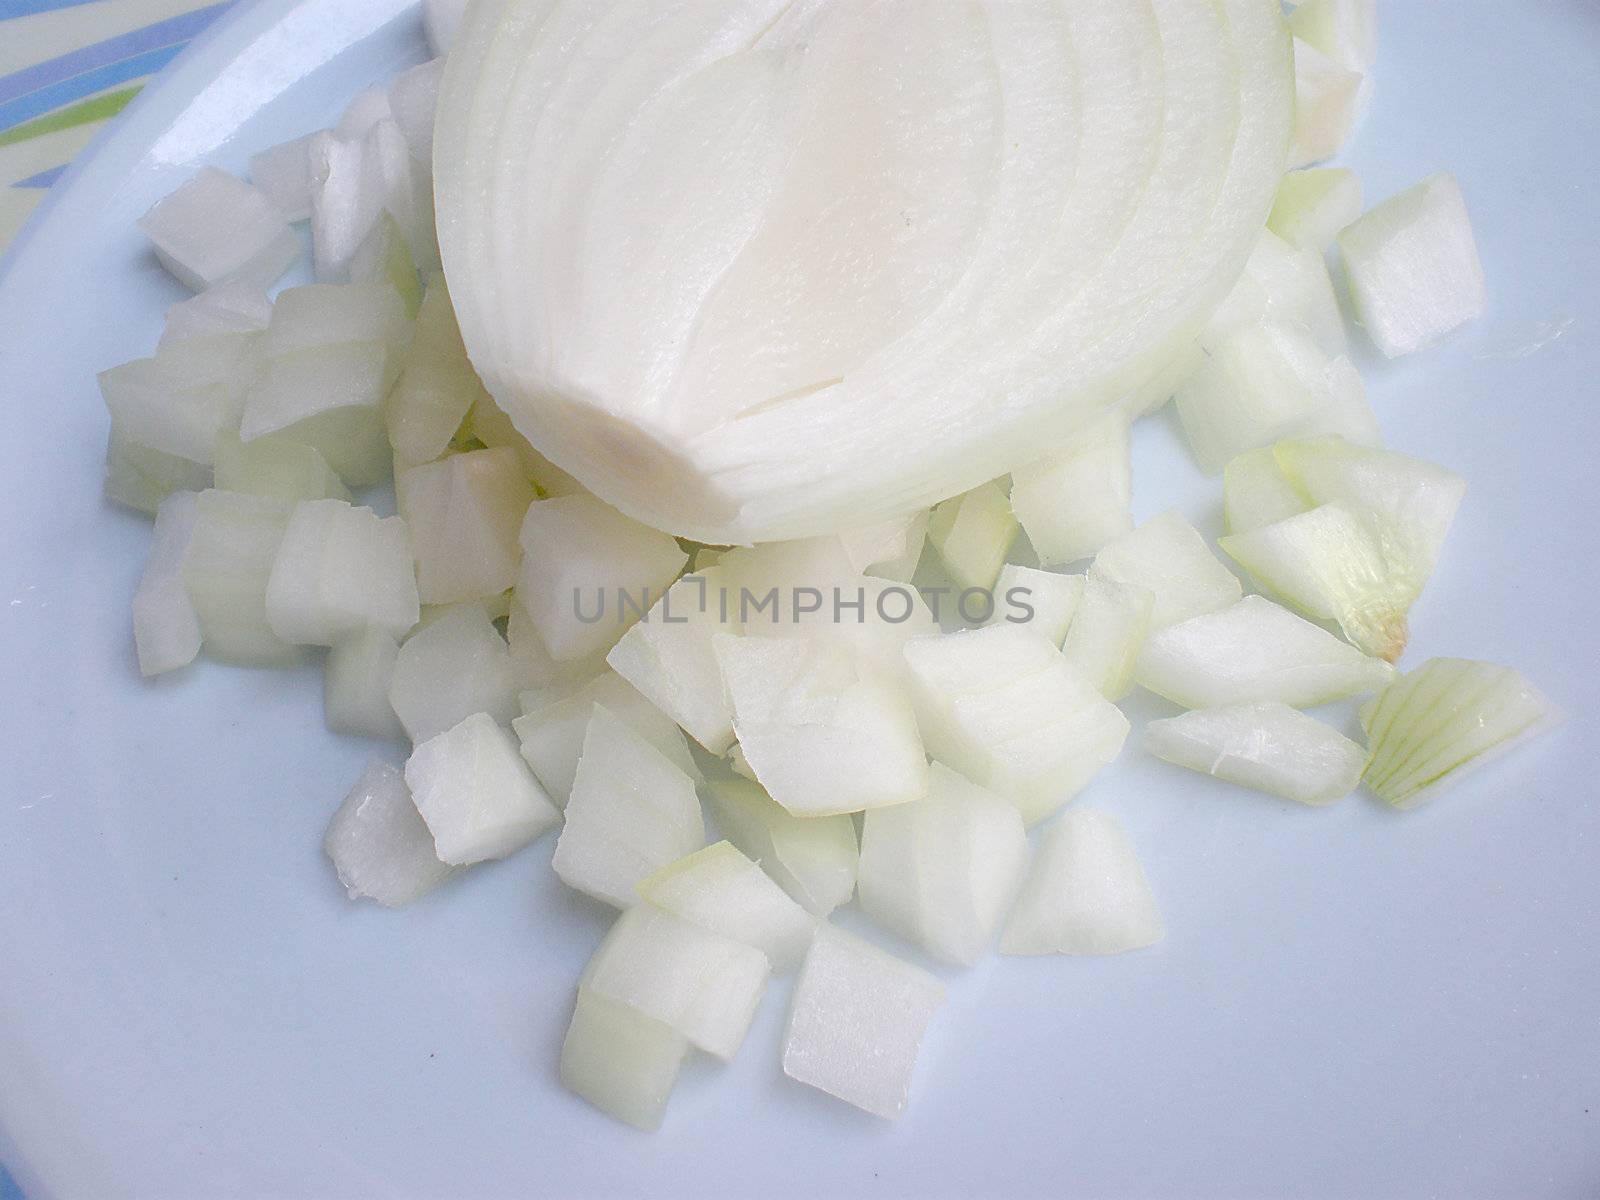 cut onion in a plate